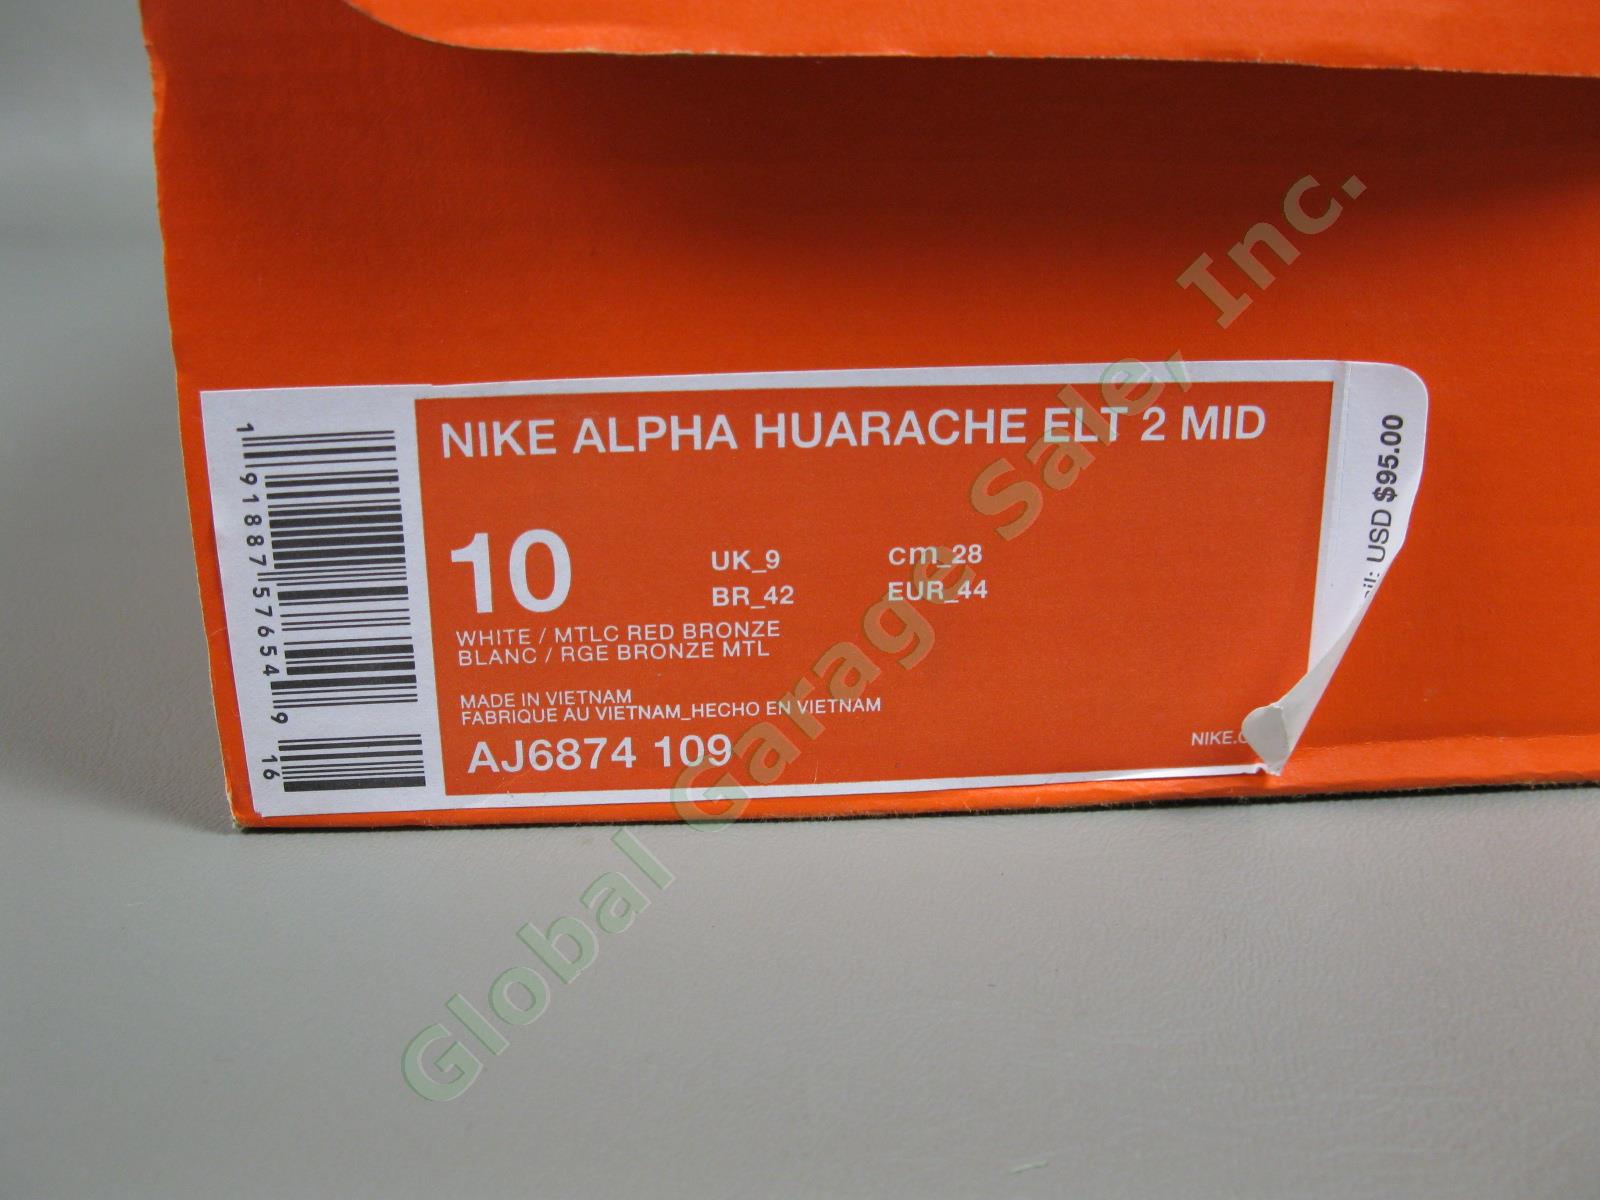 Nike Alpha Huarache Elite 2 Mid White/Copper Rose Baseball Cleats Mens Sz 10 NR 9